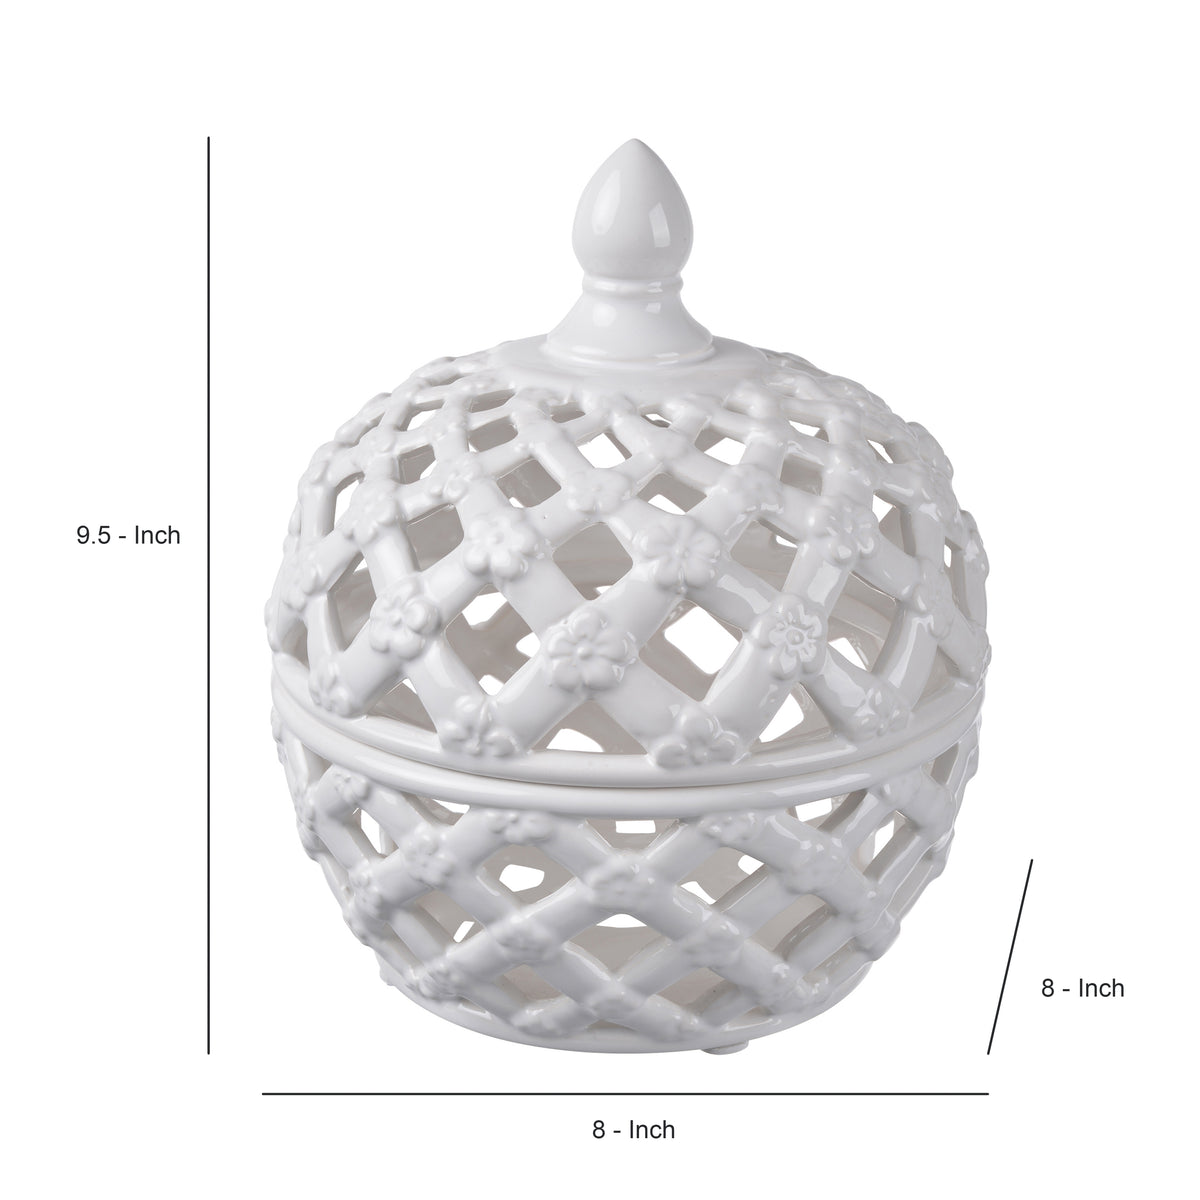 Decorative Ceramic Lidded Jar with Flower Motif Exterior, Small, White - BM202236